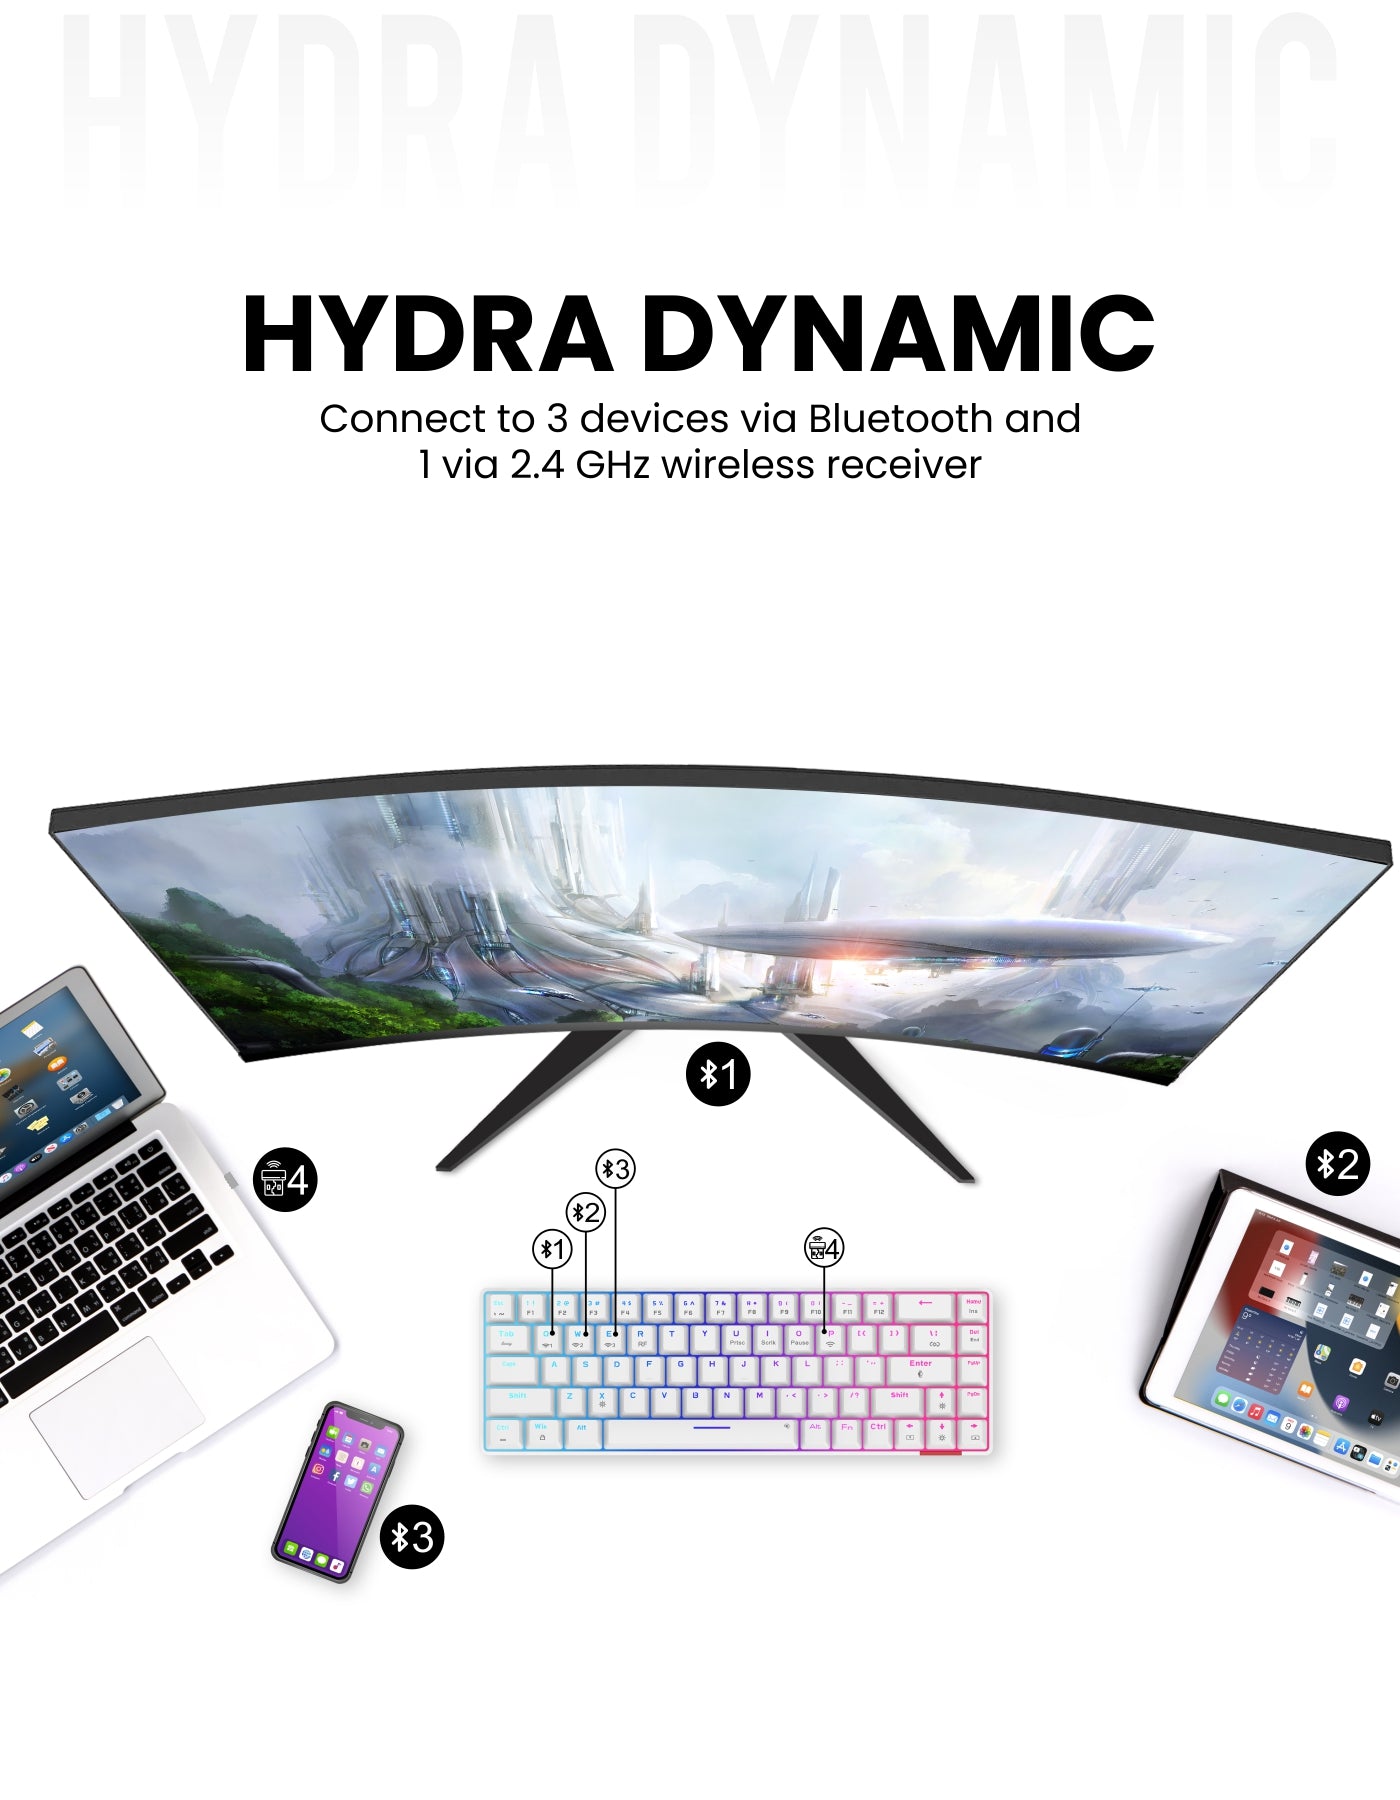 Portronics Hydra 10 Wireless Laptop Keyboard with multi connectivity options